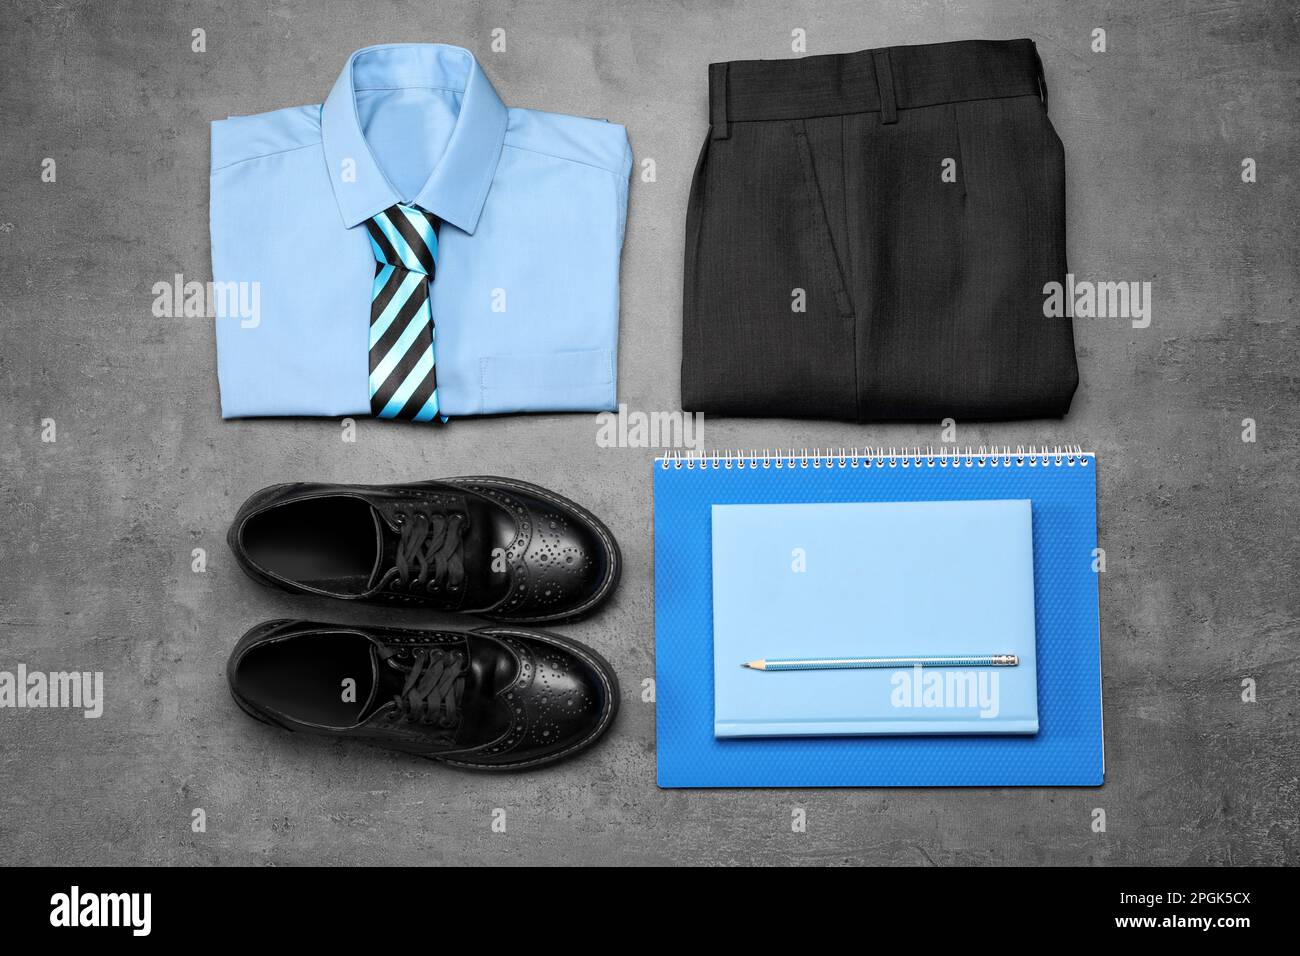 Stylish school uniform for boy and stationery on grey background, flat lay Stock Photo